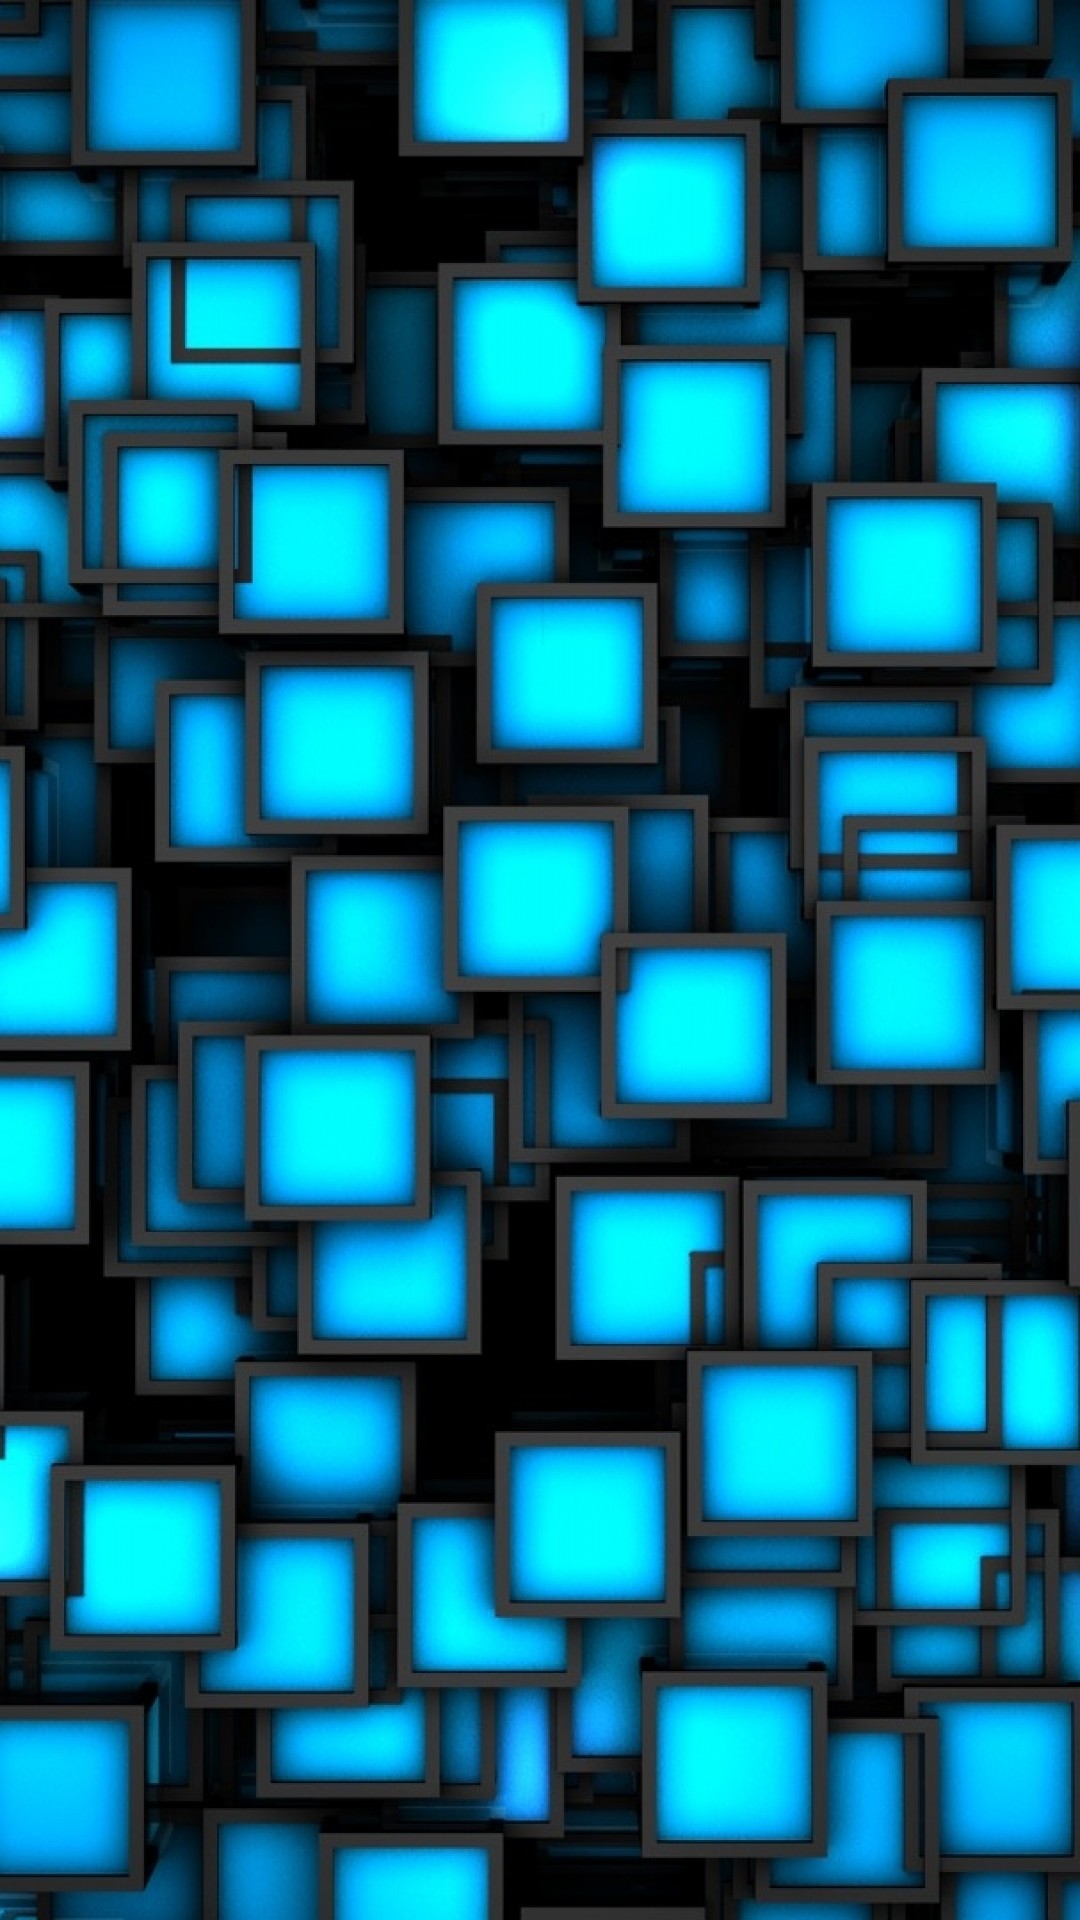 1080x1920 Download Wallpaper  Black Blue Bright Squares Sony. design lamps.  art deco wall decor home ...